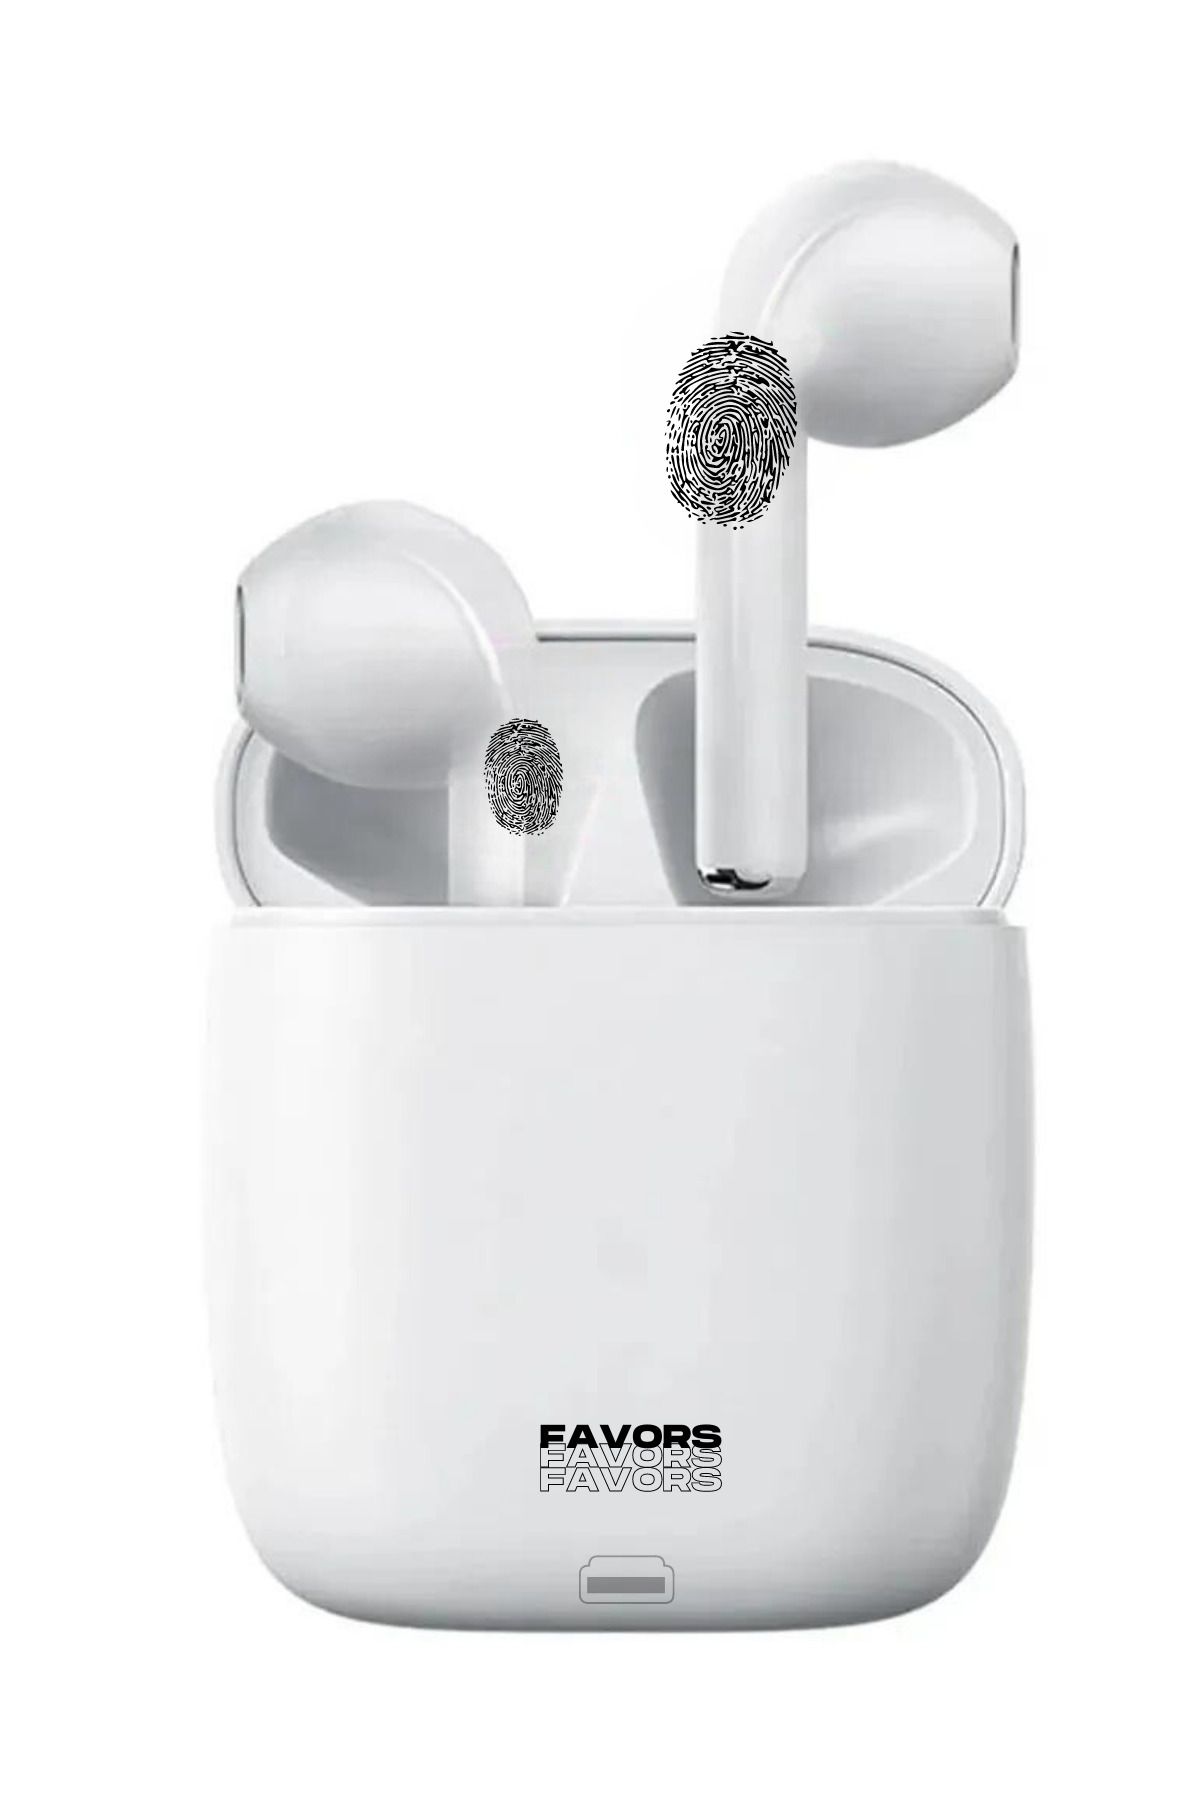 Favors Ios Android Uyumlu Dokunmatik Bluetooth Kulaklık 8d Stereo Hd Ses İnpods Beyaz